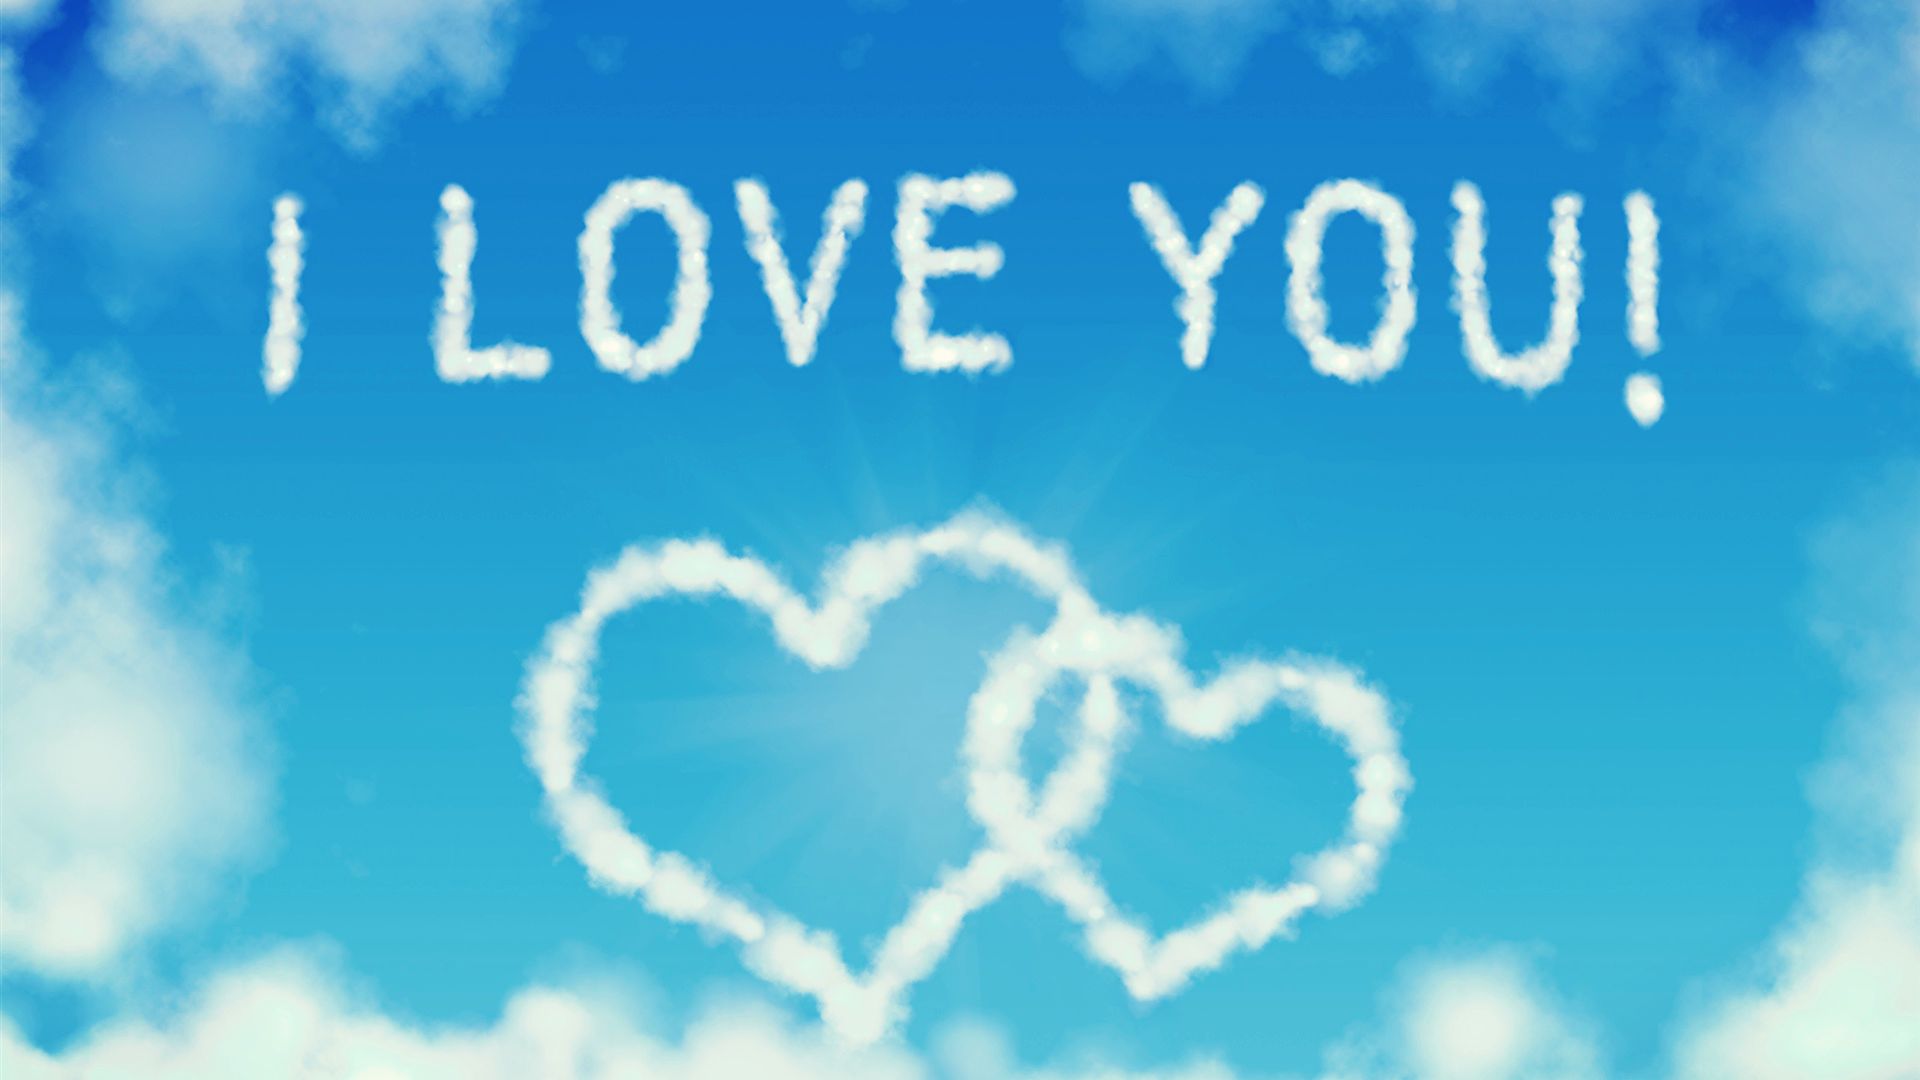 I Love You Heart Wallpaper